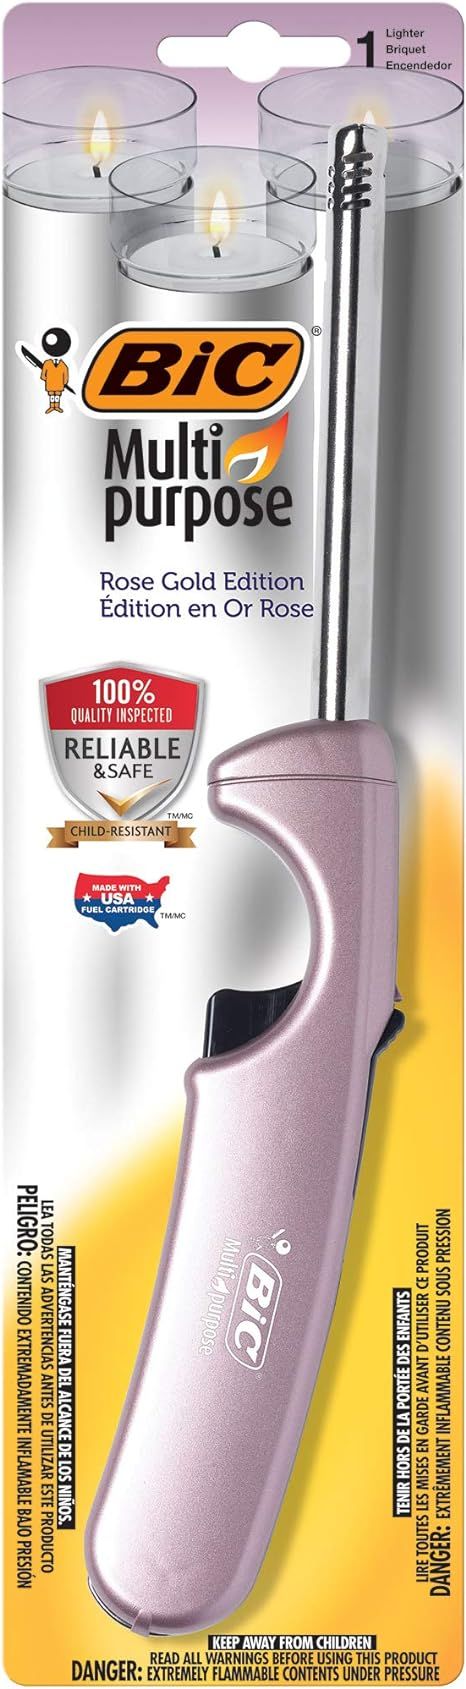 BIC Multi-Purpose Rose Gold Edition Lighter, 1-Pack | Amazon (US)